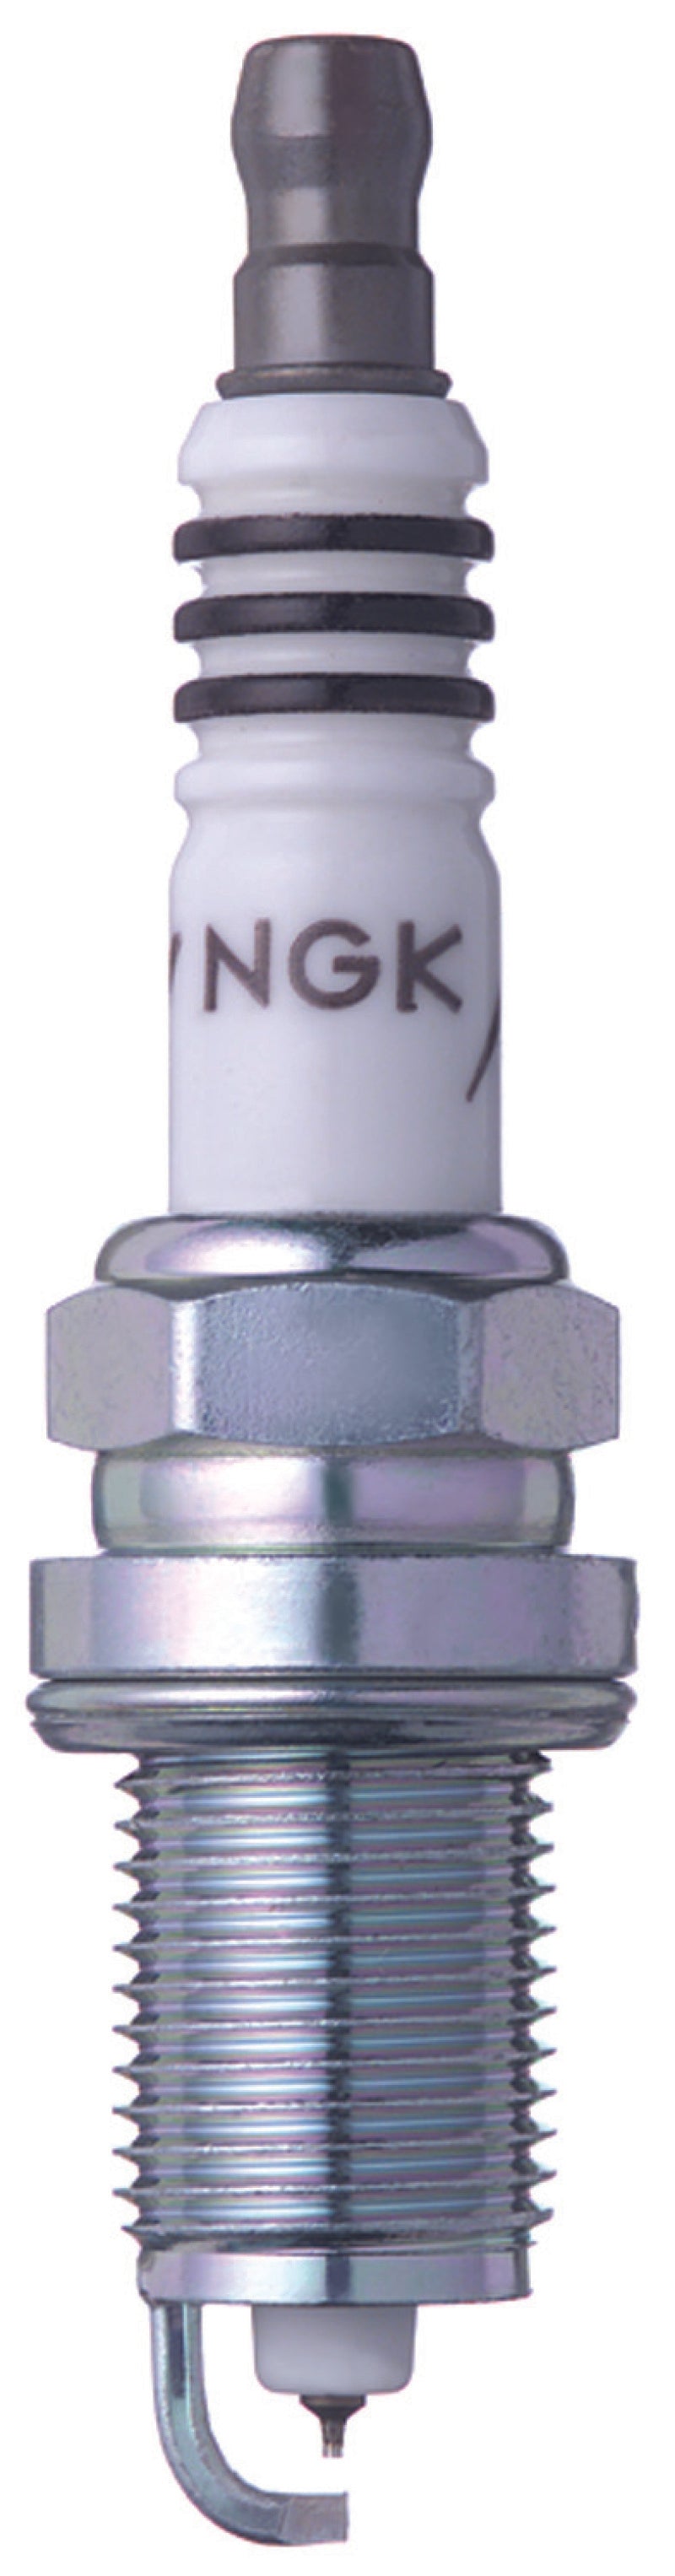 NGK Iridium Spark Plug Box of 4 (IZFR6F11) -  Shop now at Performance Car Parts